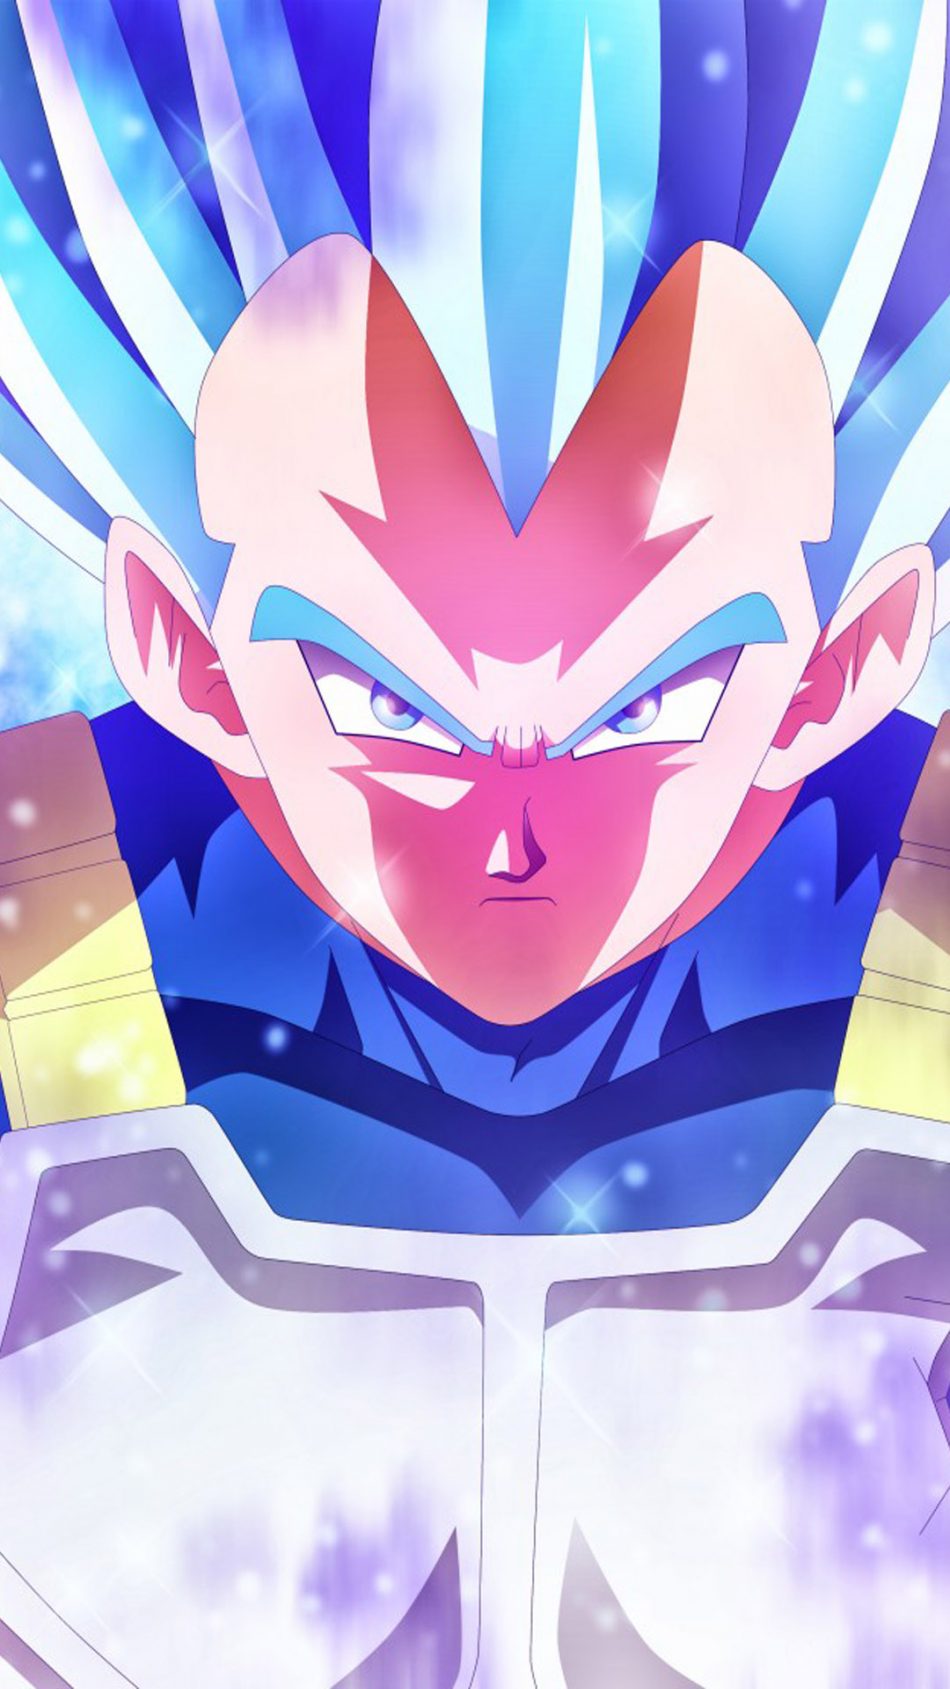 Desktophut Ver2 Dragon Ball Super Goku Transformation 4k Live